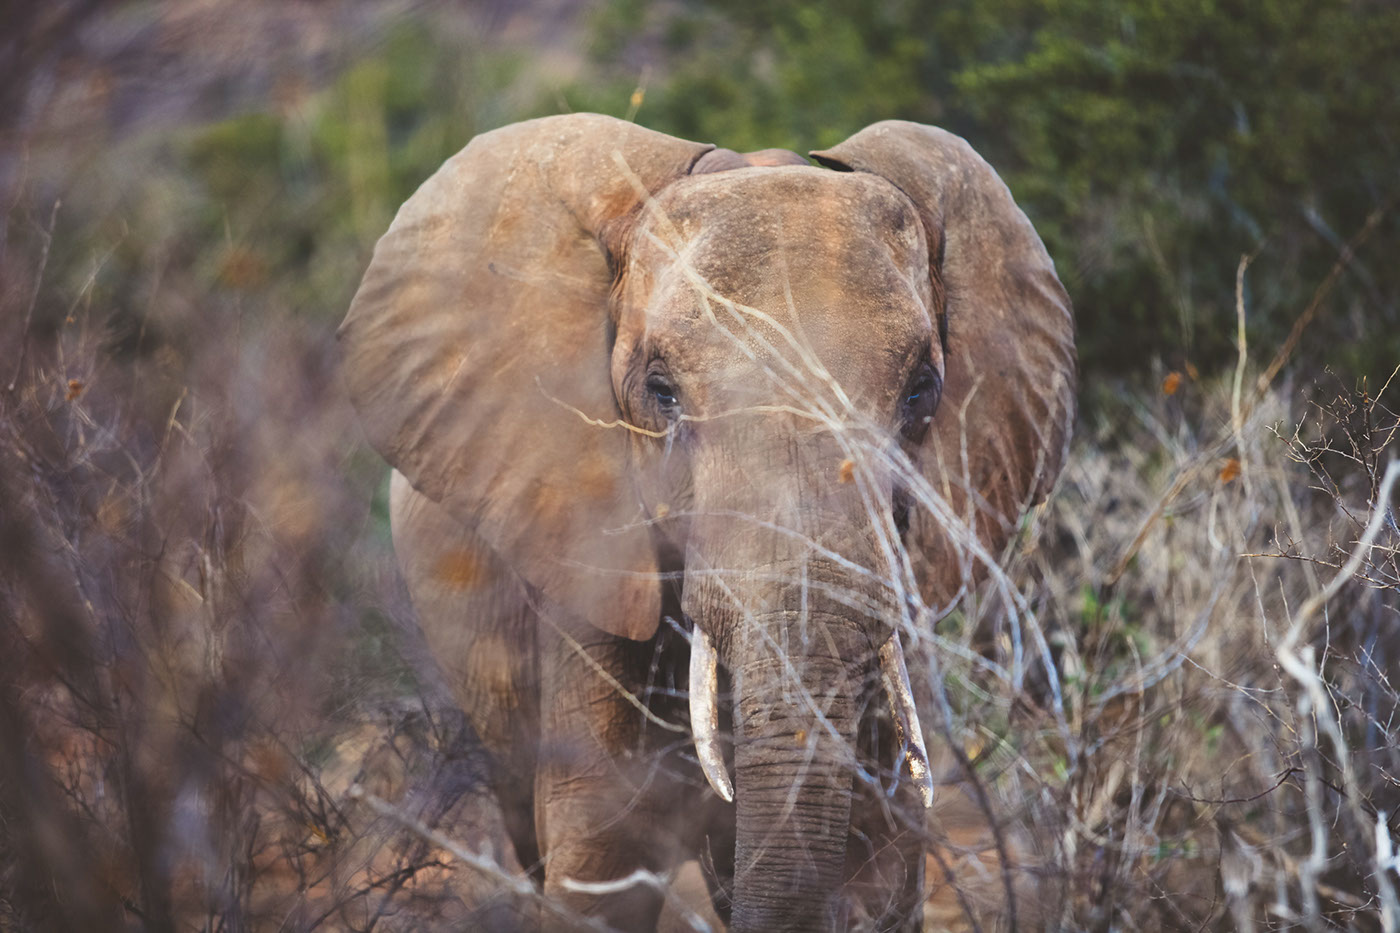 tsavo east Lions elephants wildlife safari kenya Nature red soil red elephants africa